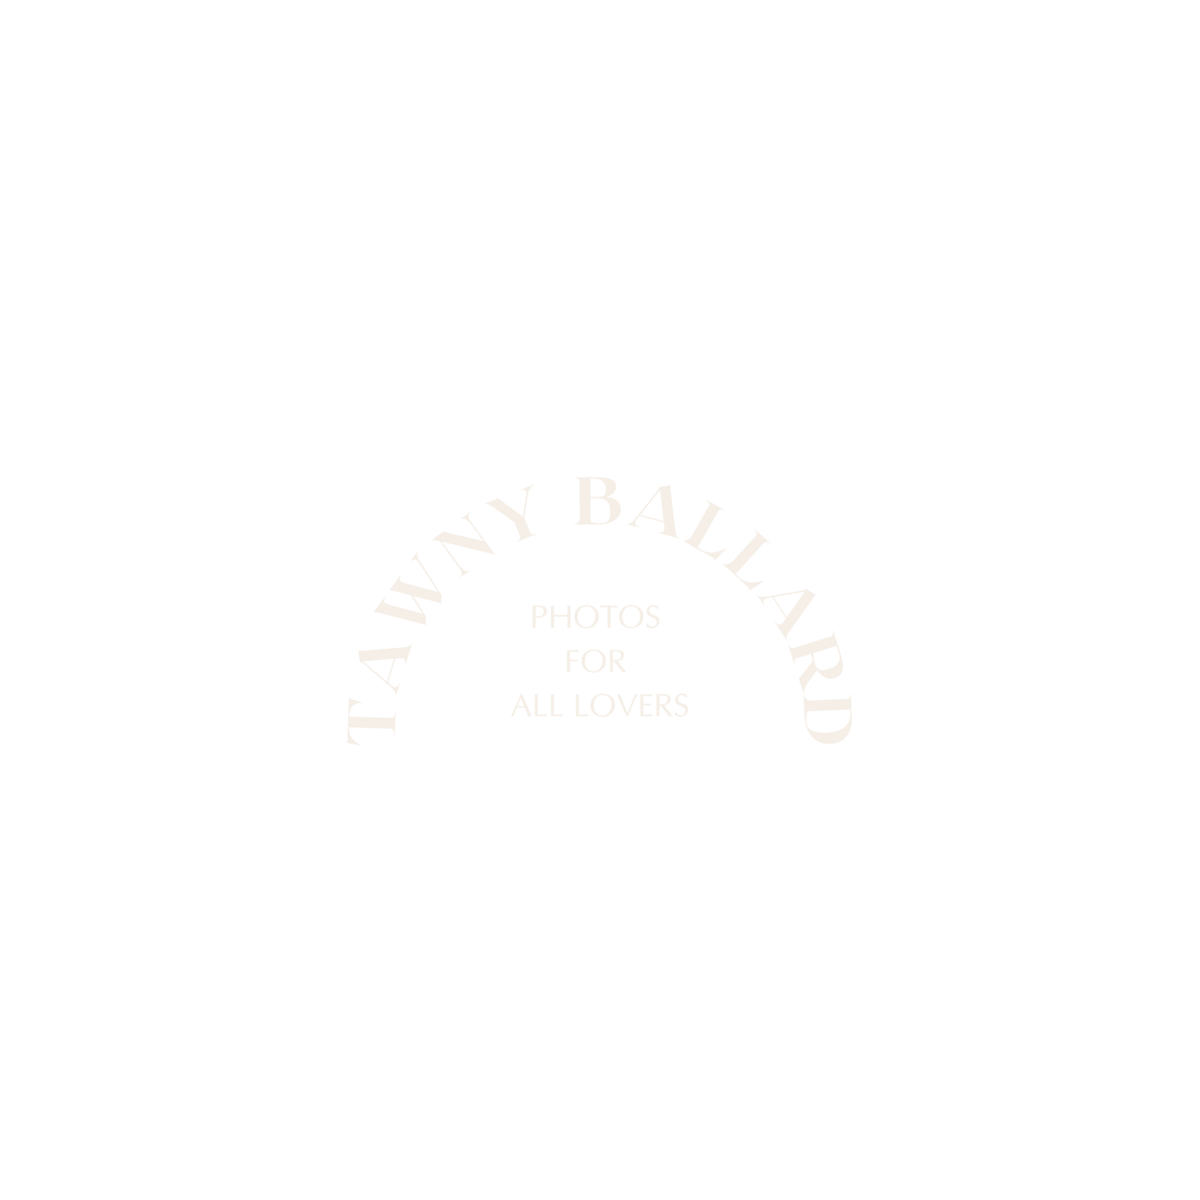 St Louis wedding photographer logo for Tawny Ballard Photography